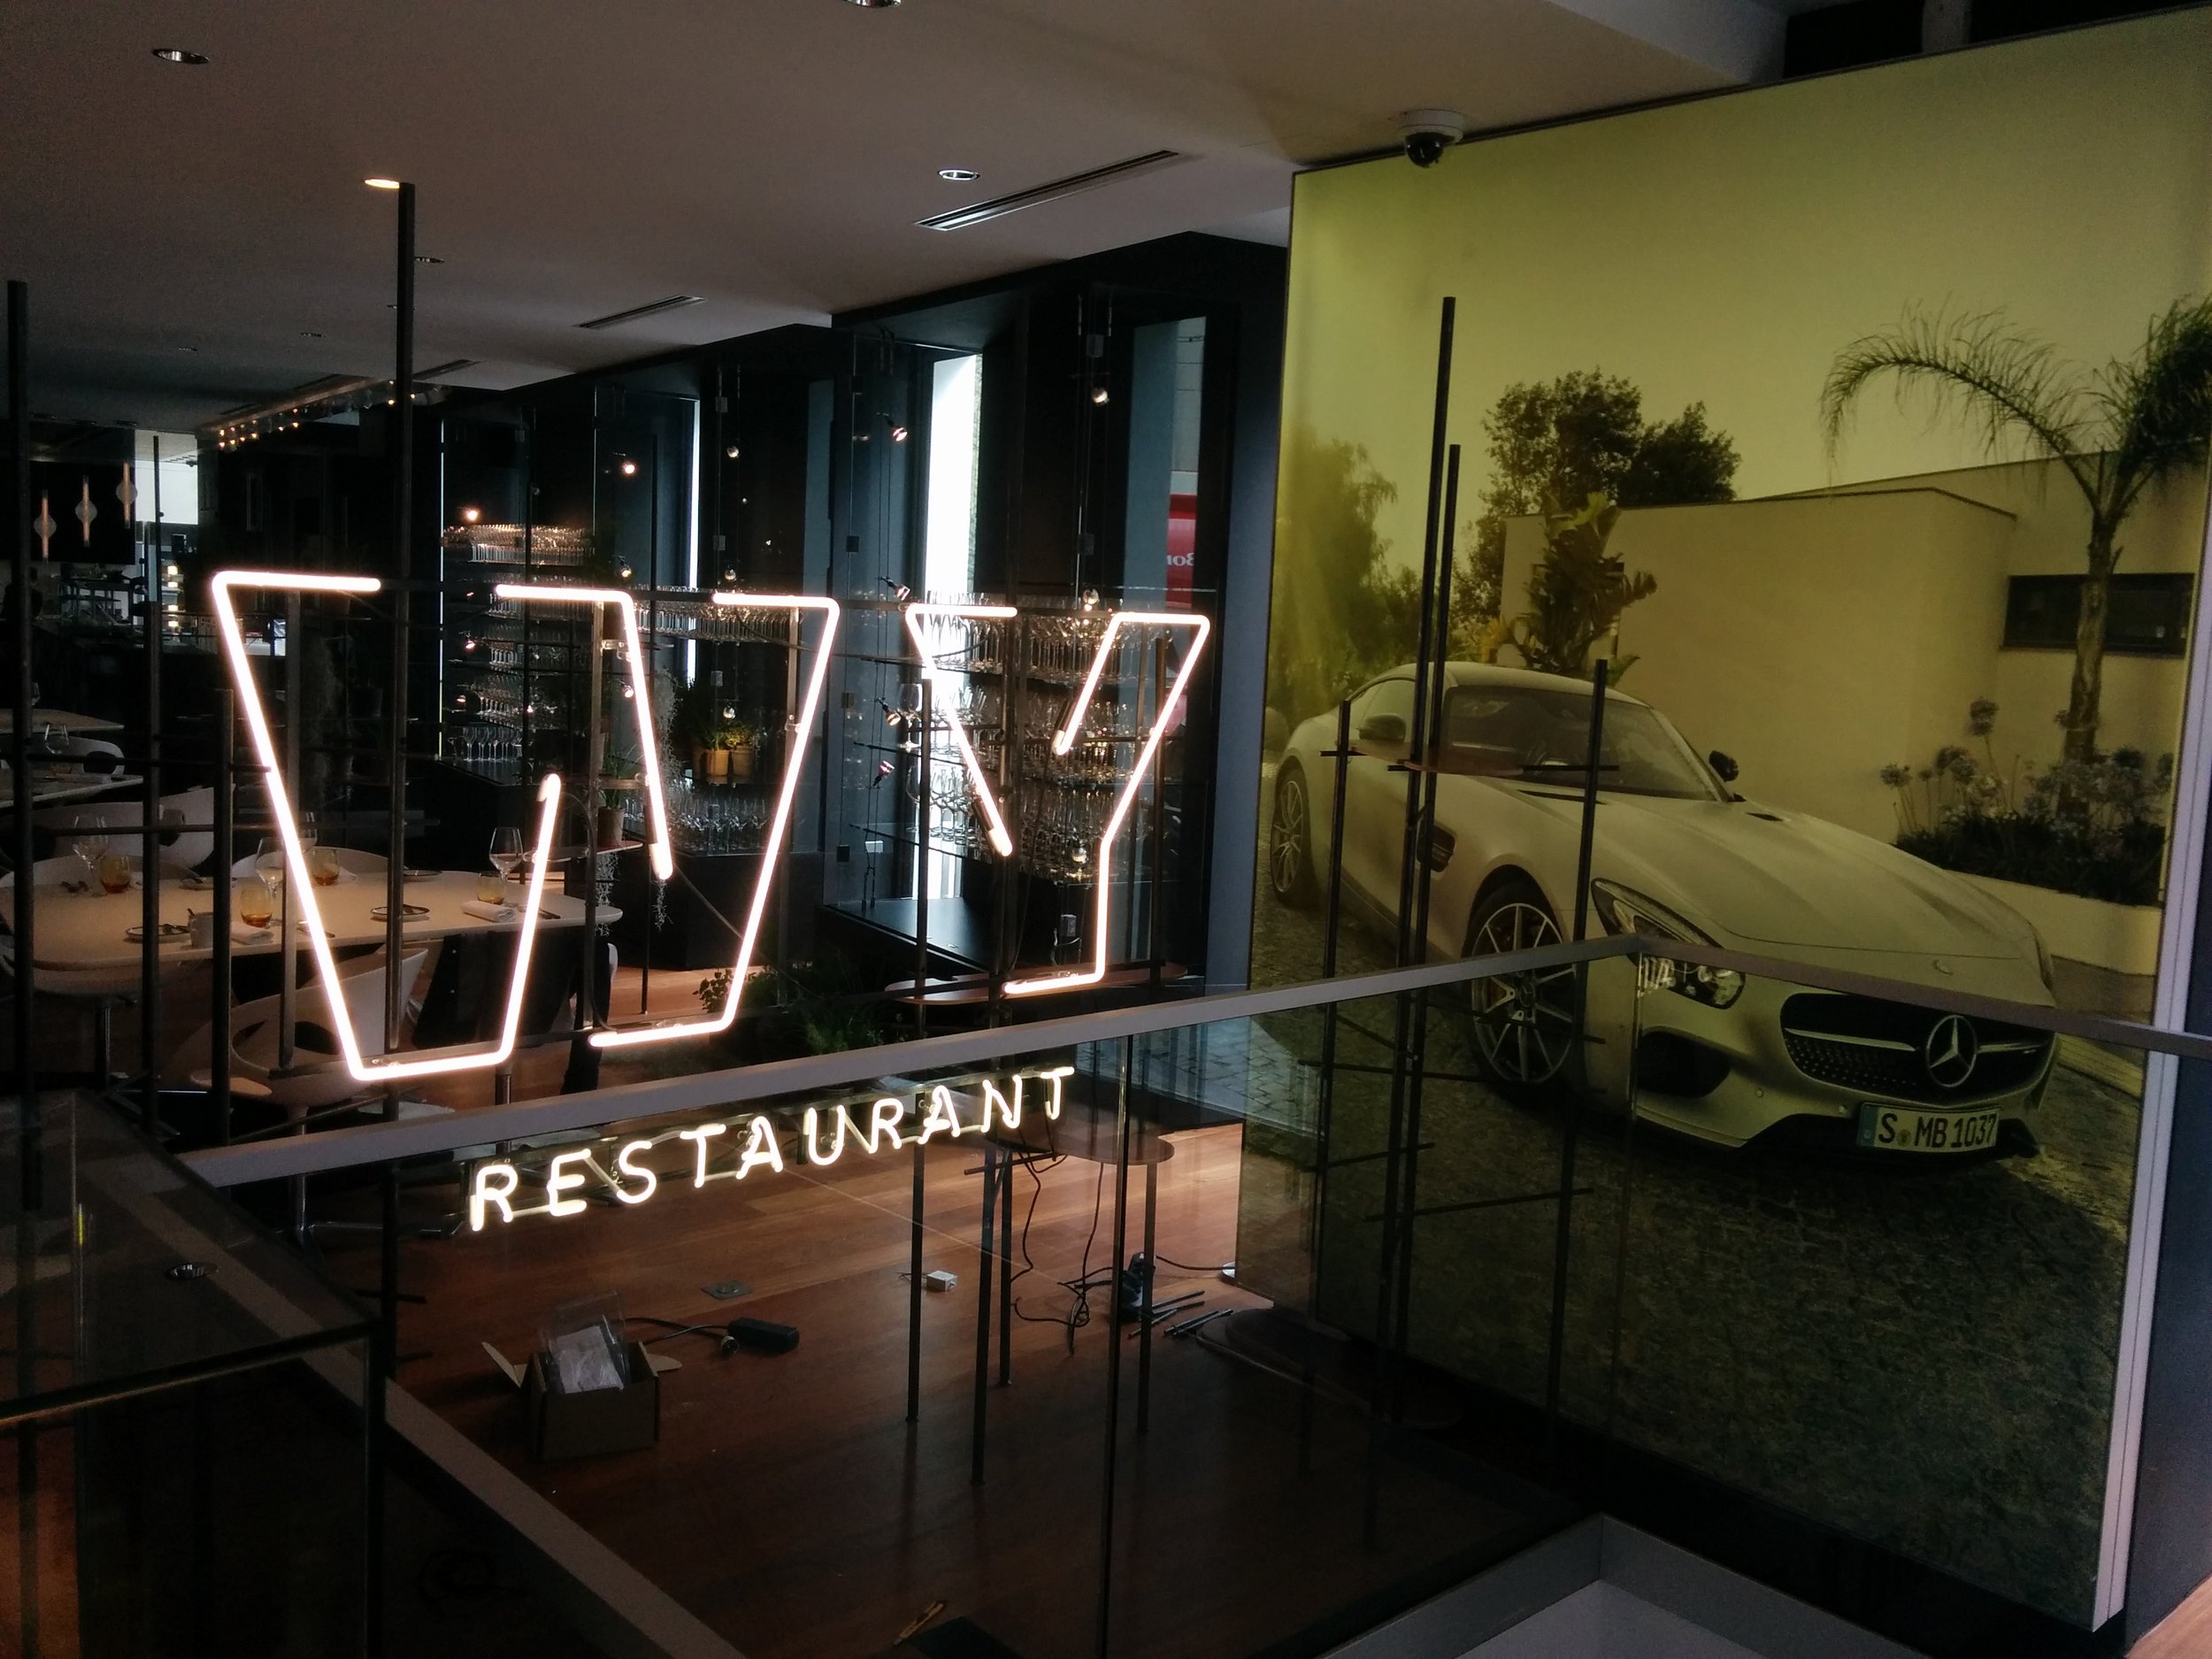 Copy of Neonreclame WY Restaurant